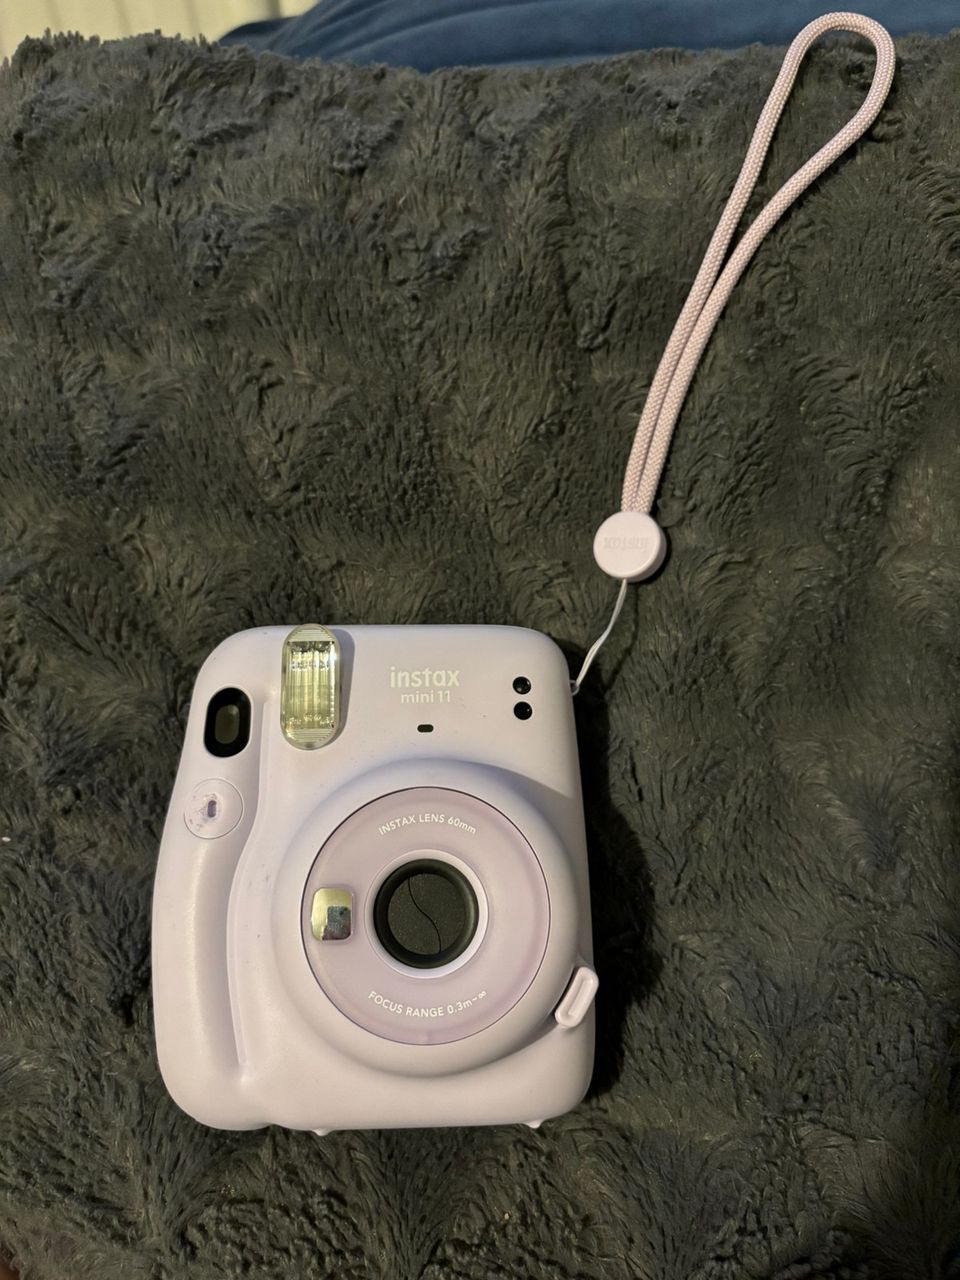 Polaroid kamera